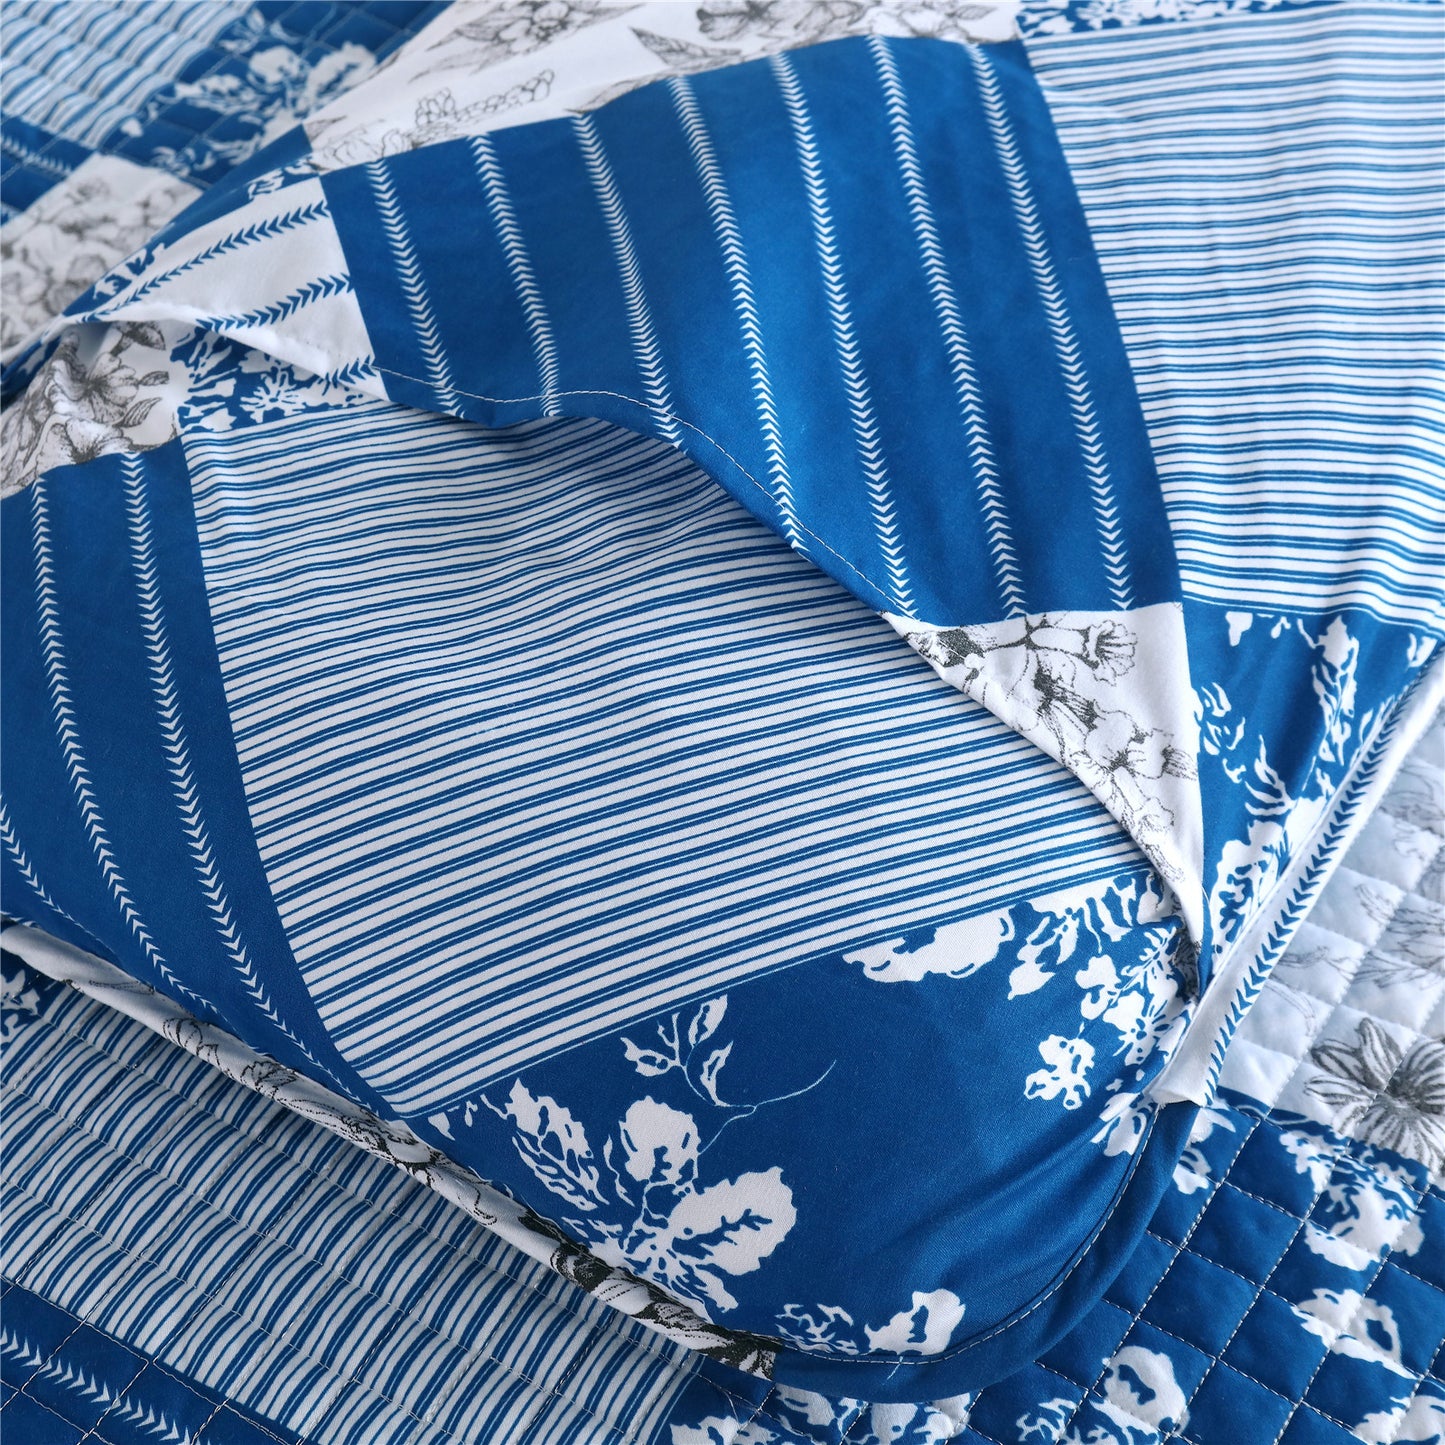 Blue Line Lattice Flower Splicing 3 Pieces Quilt Set with 2 Pillowcases